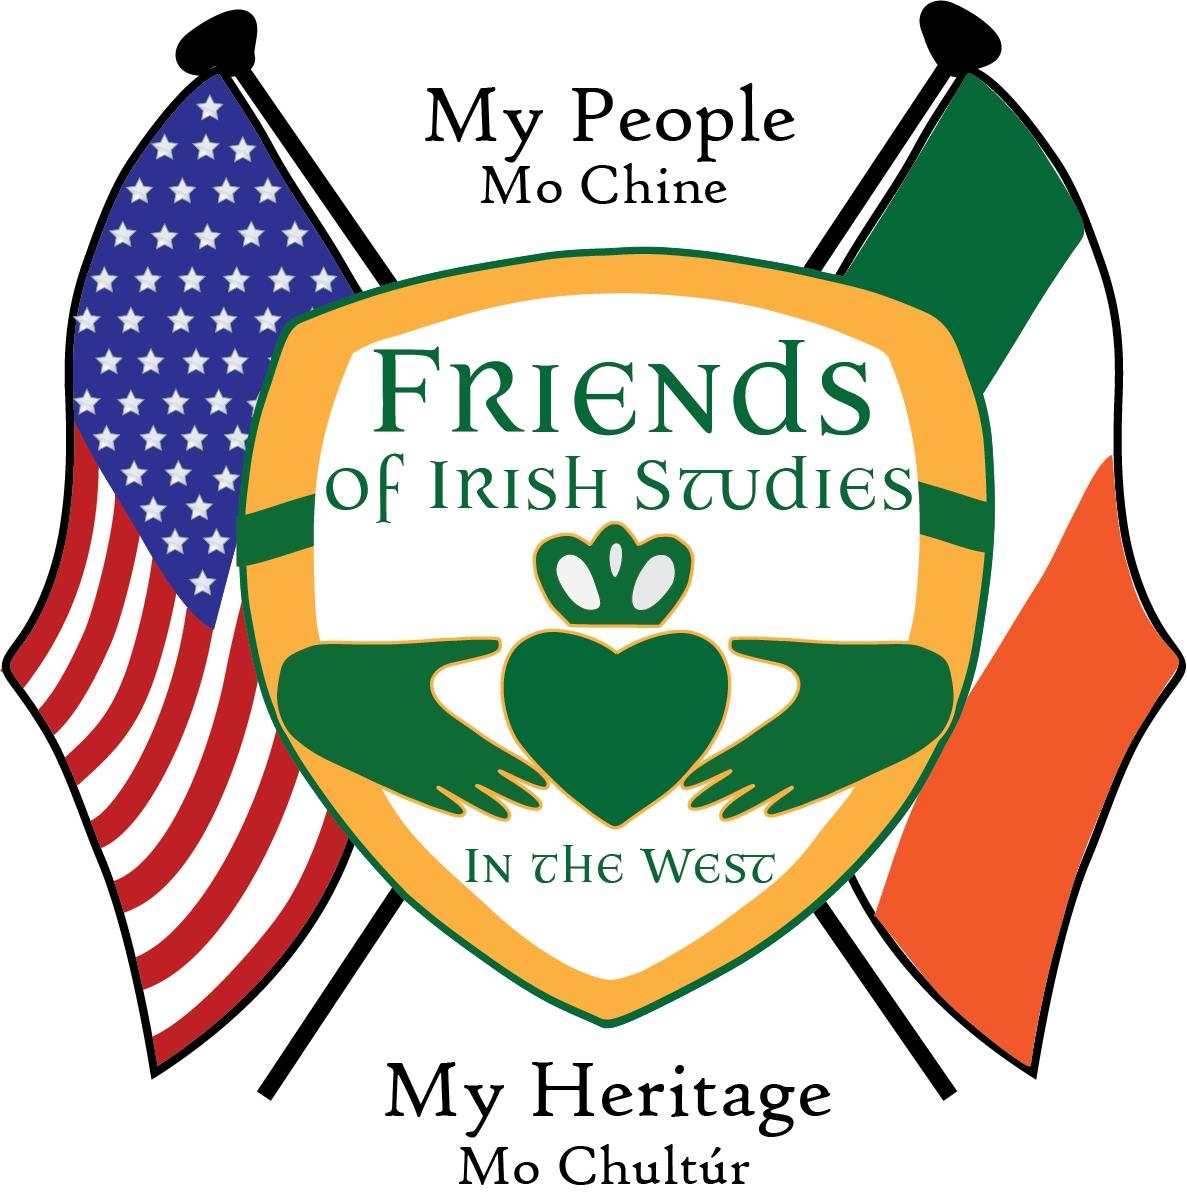 Friends of Irish Studies in the West